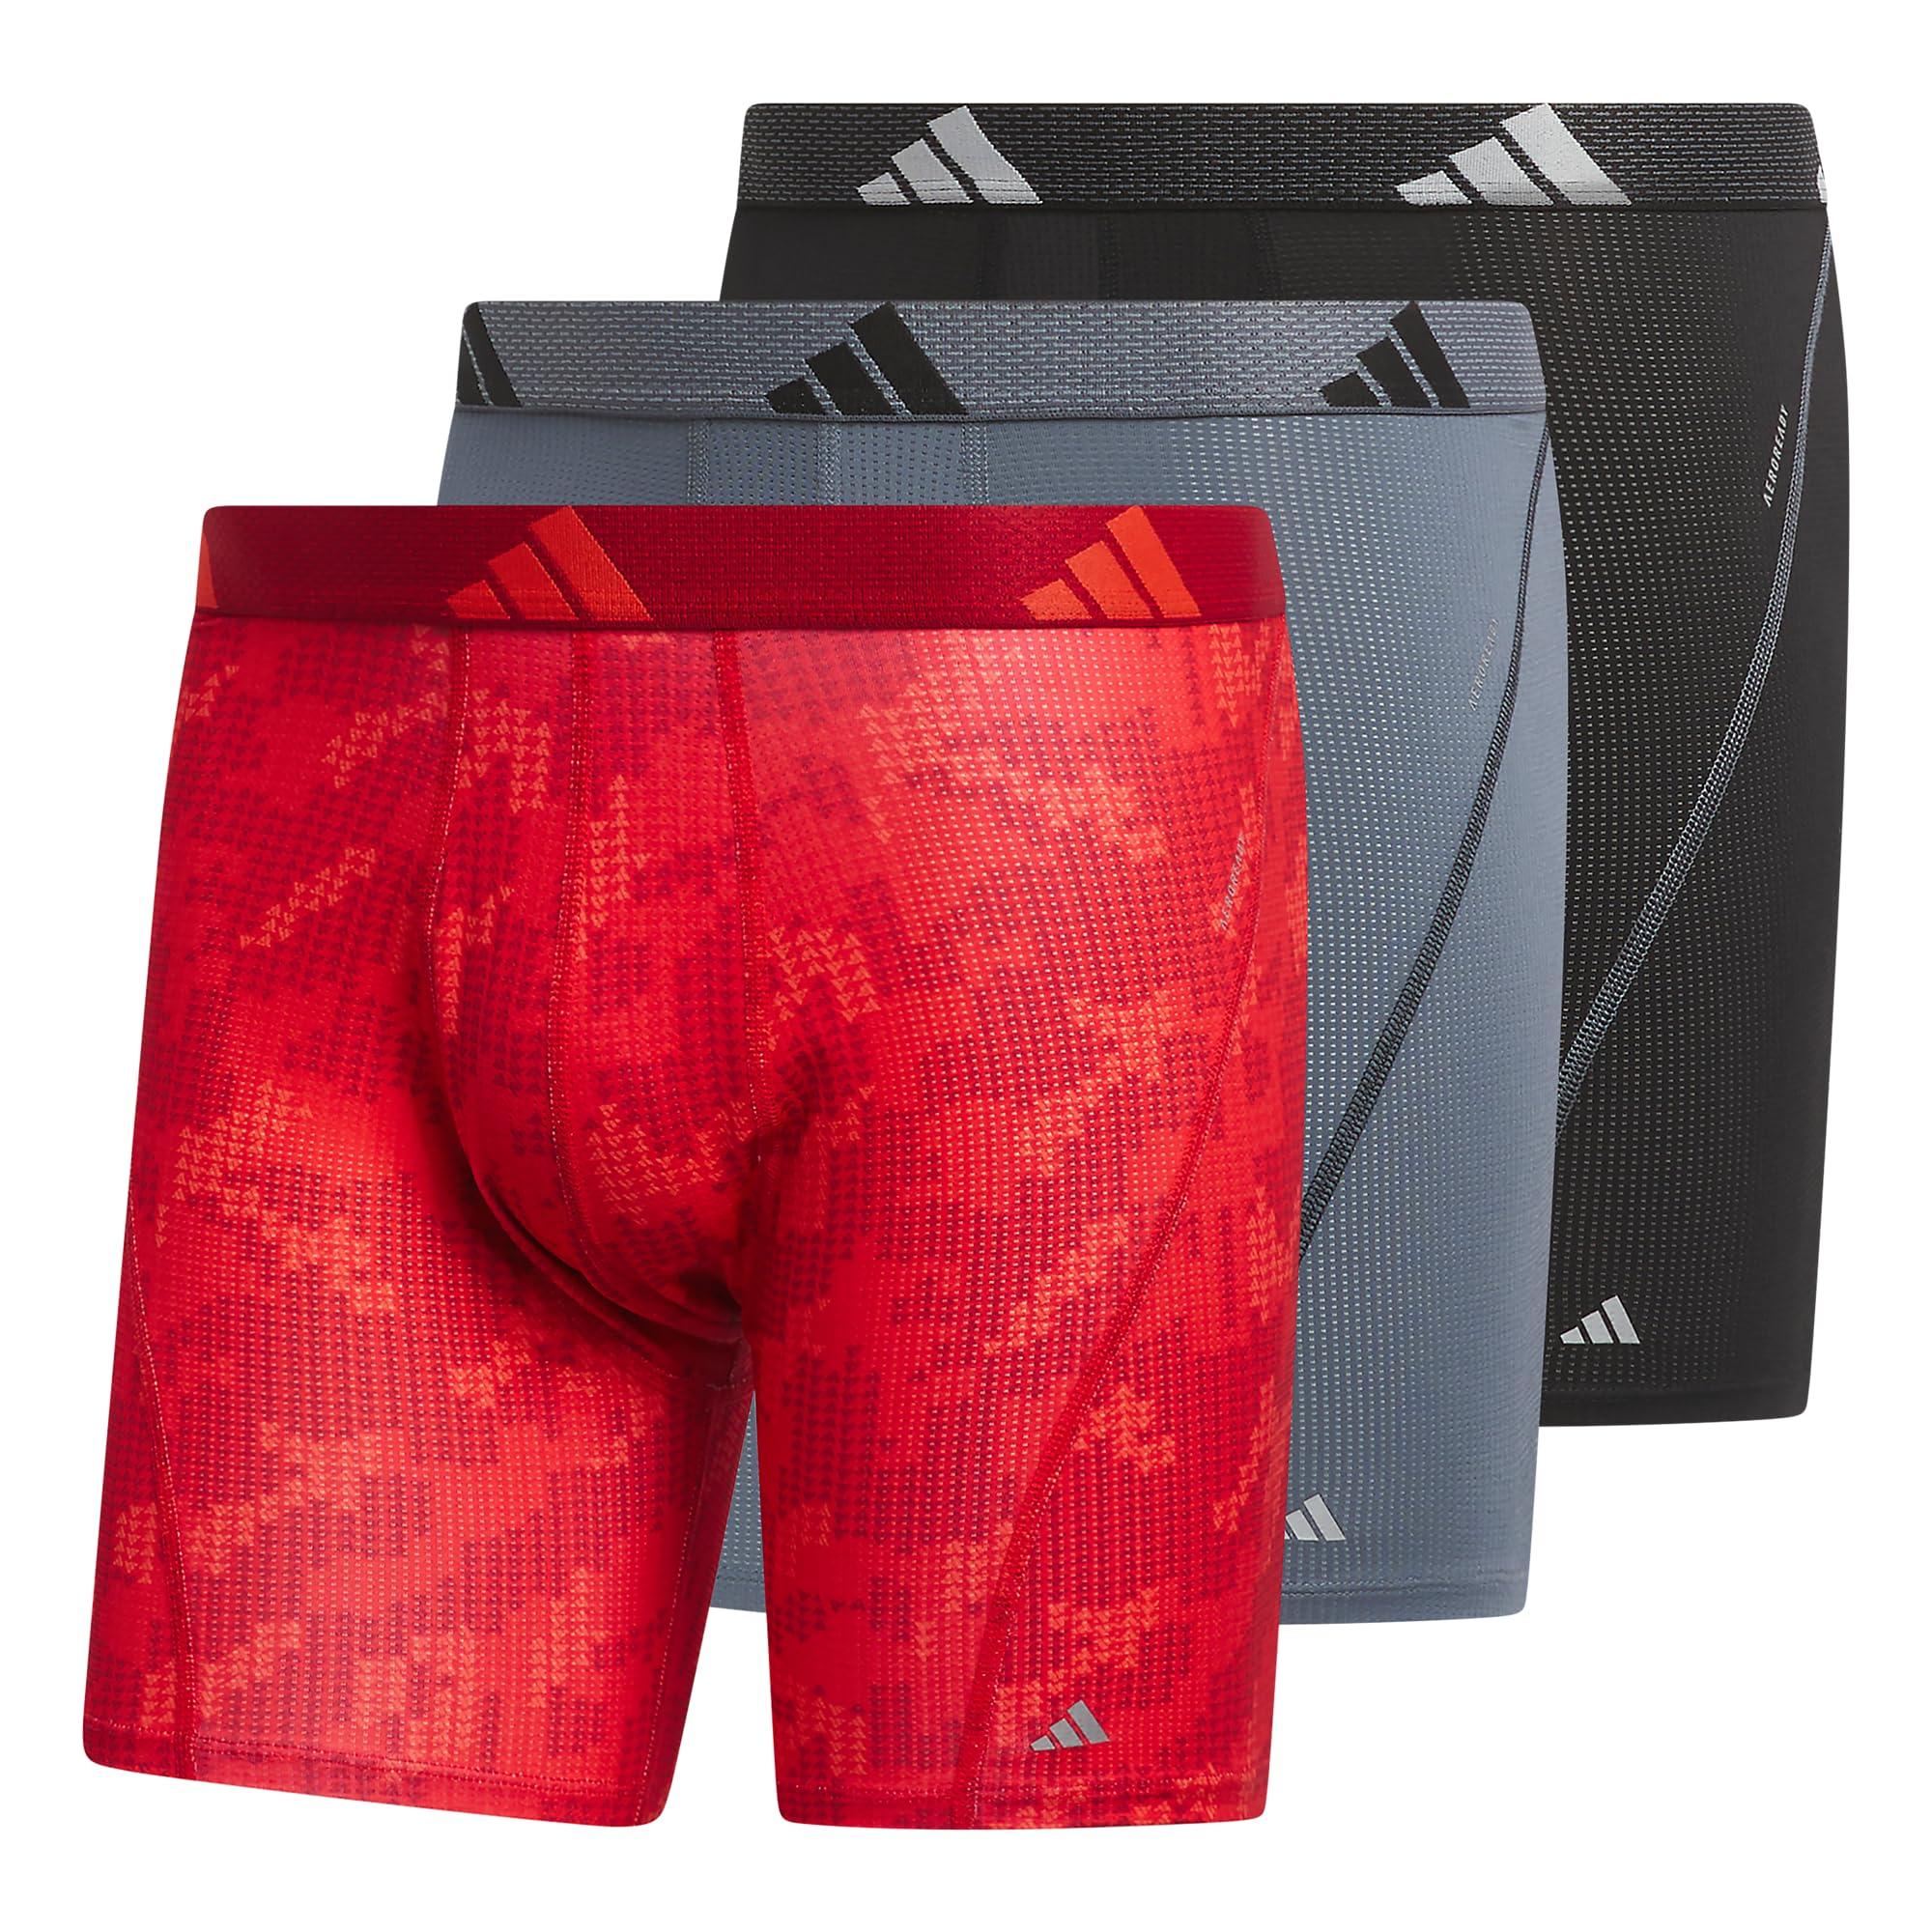 https://cdna.lystit.com/photos/amazon-prime/2b8e5865/adidas-Digi-Camo-Better-Scarlet-bright-Performance-Mesh-Boxer-Brief-Underwear.jpeg